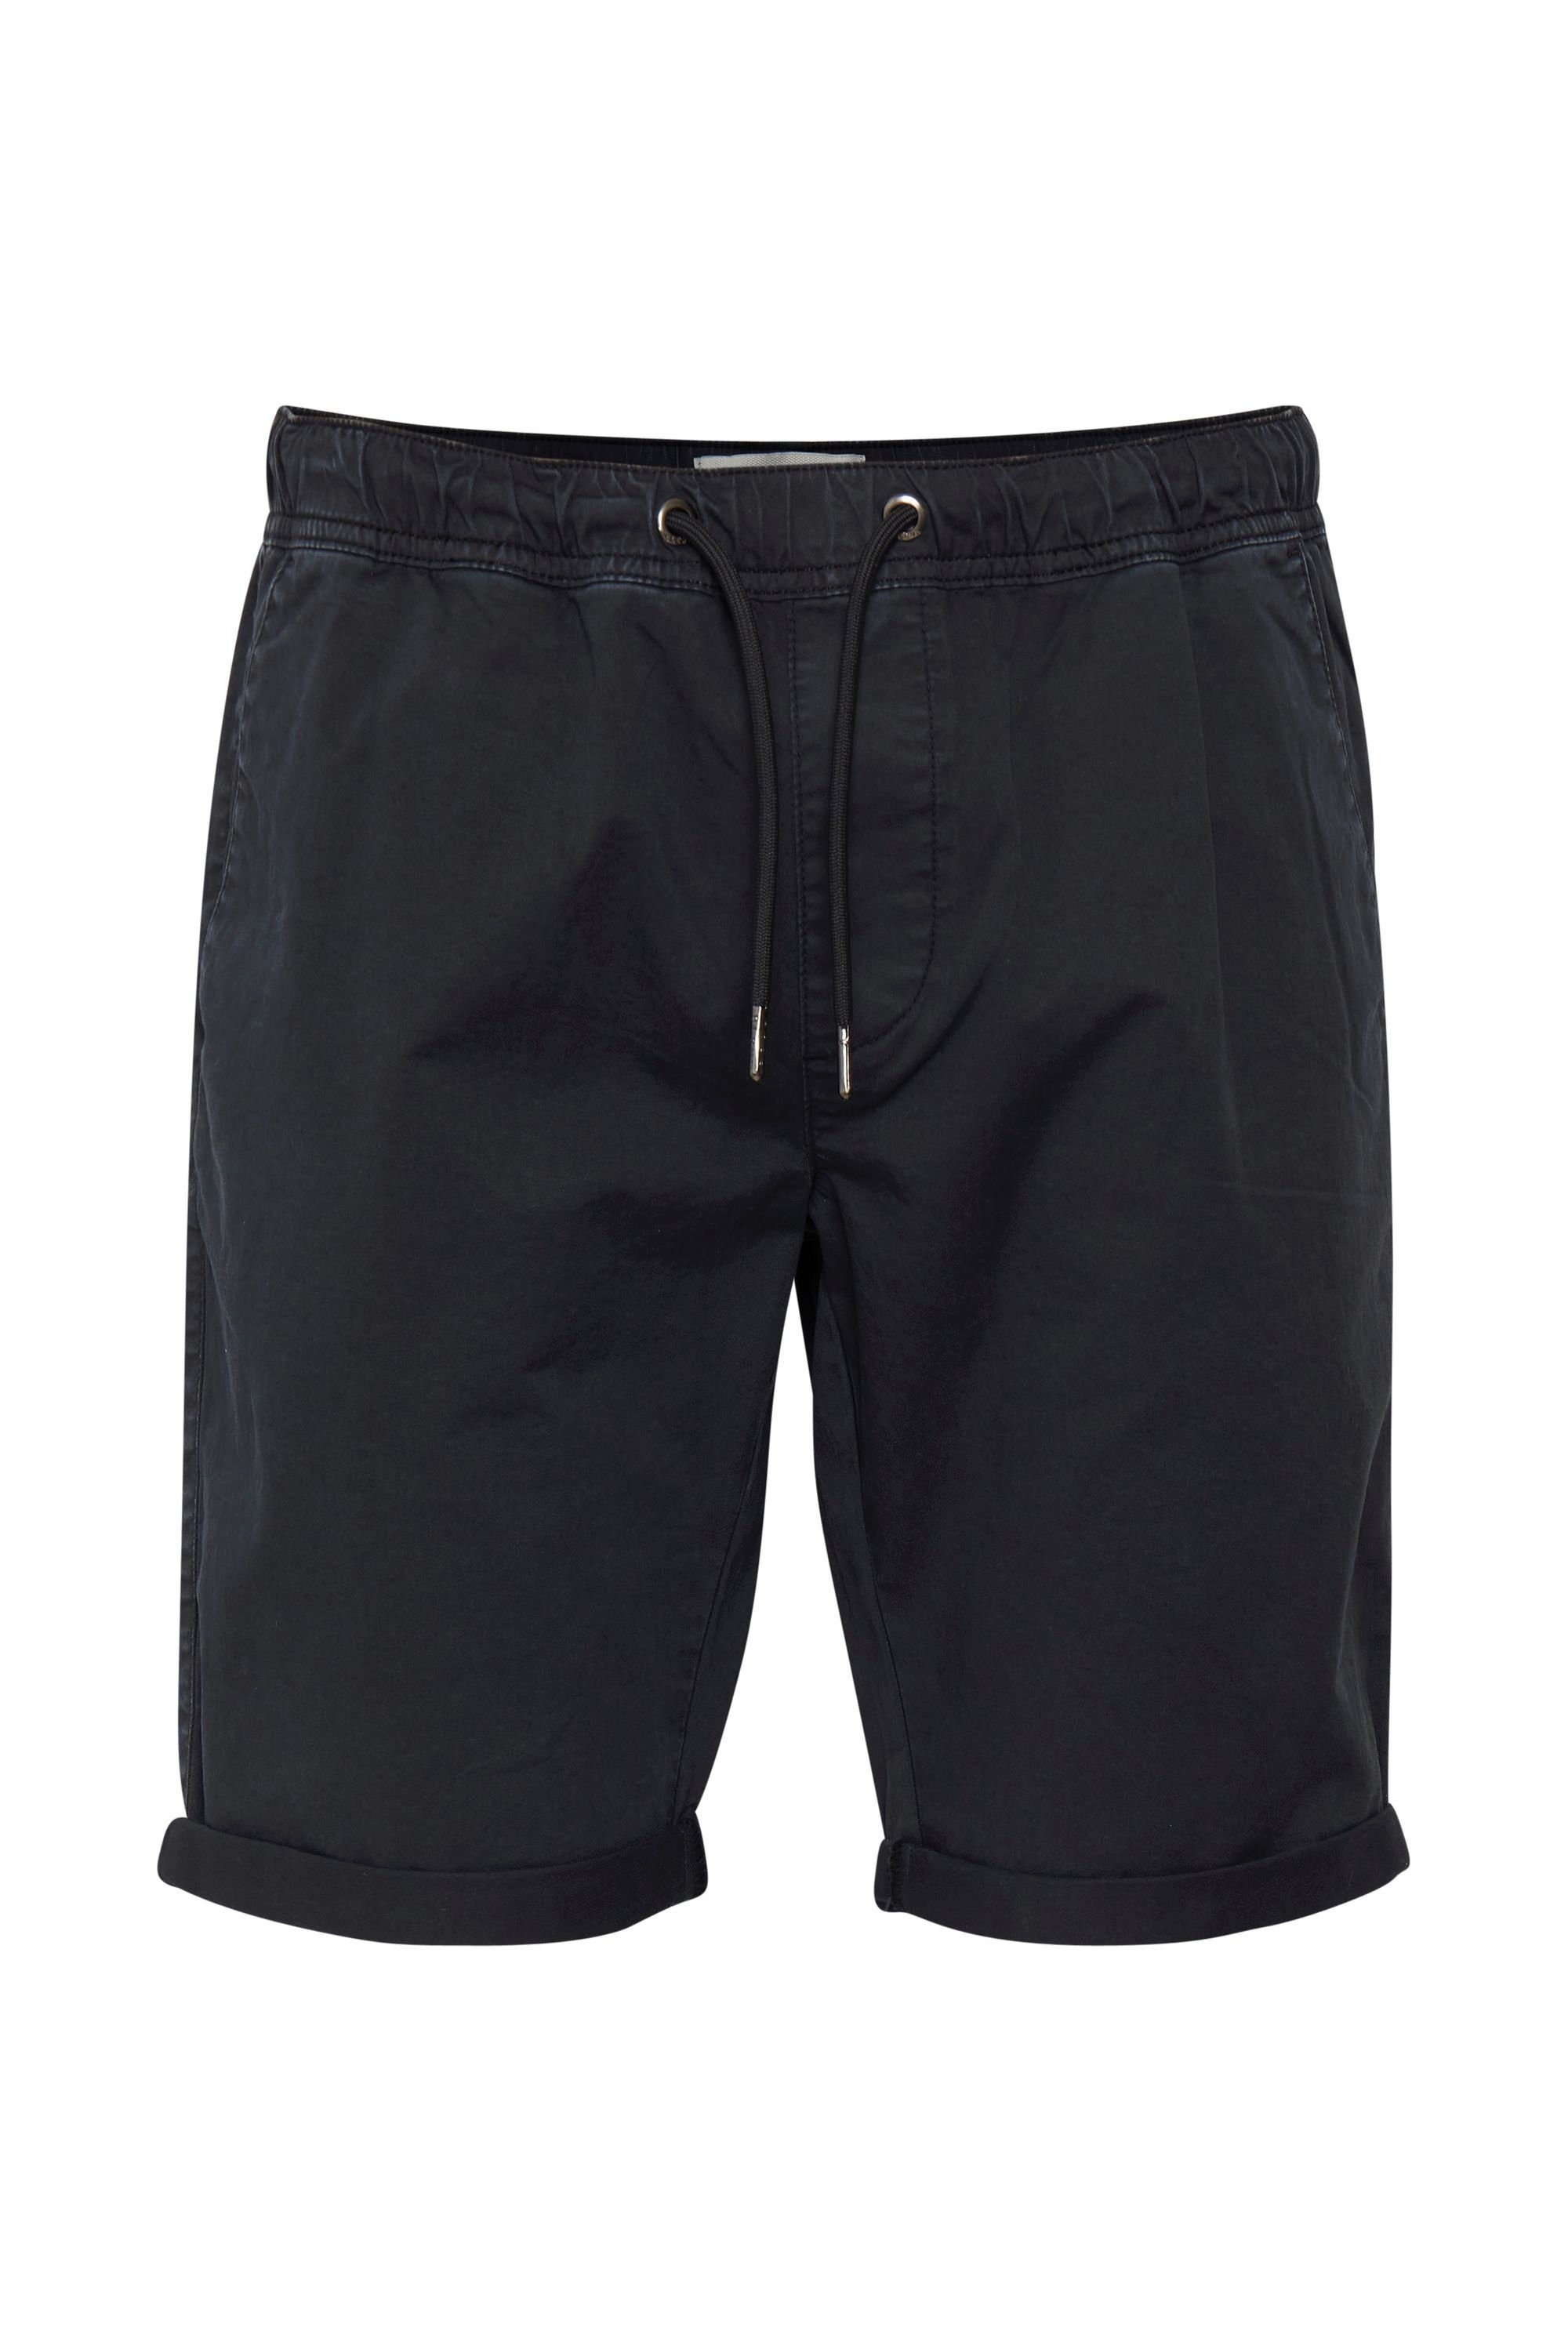 b.young Blend Chinoshorts BHBradley Chino Shorts mit elastischem Bund und Kordel Black (194007)